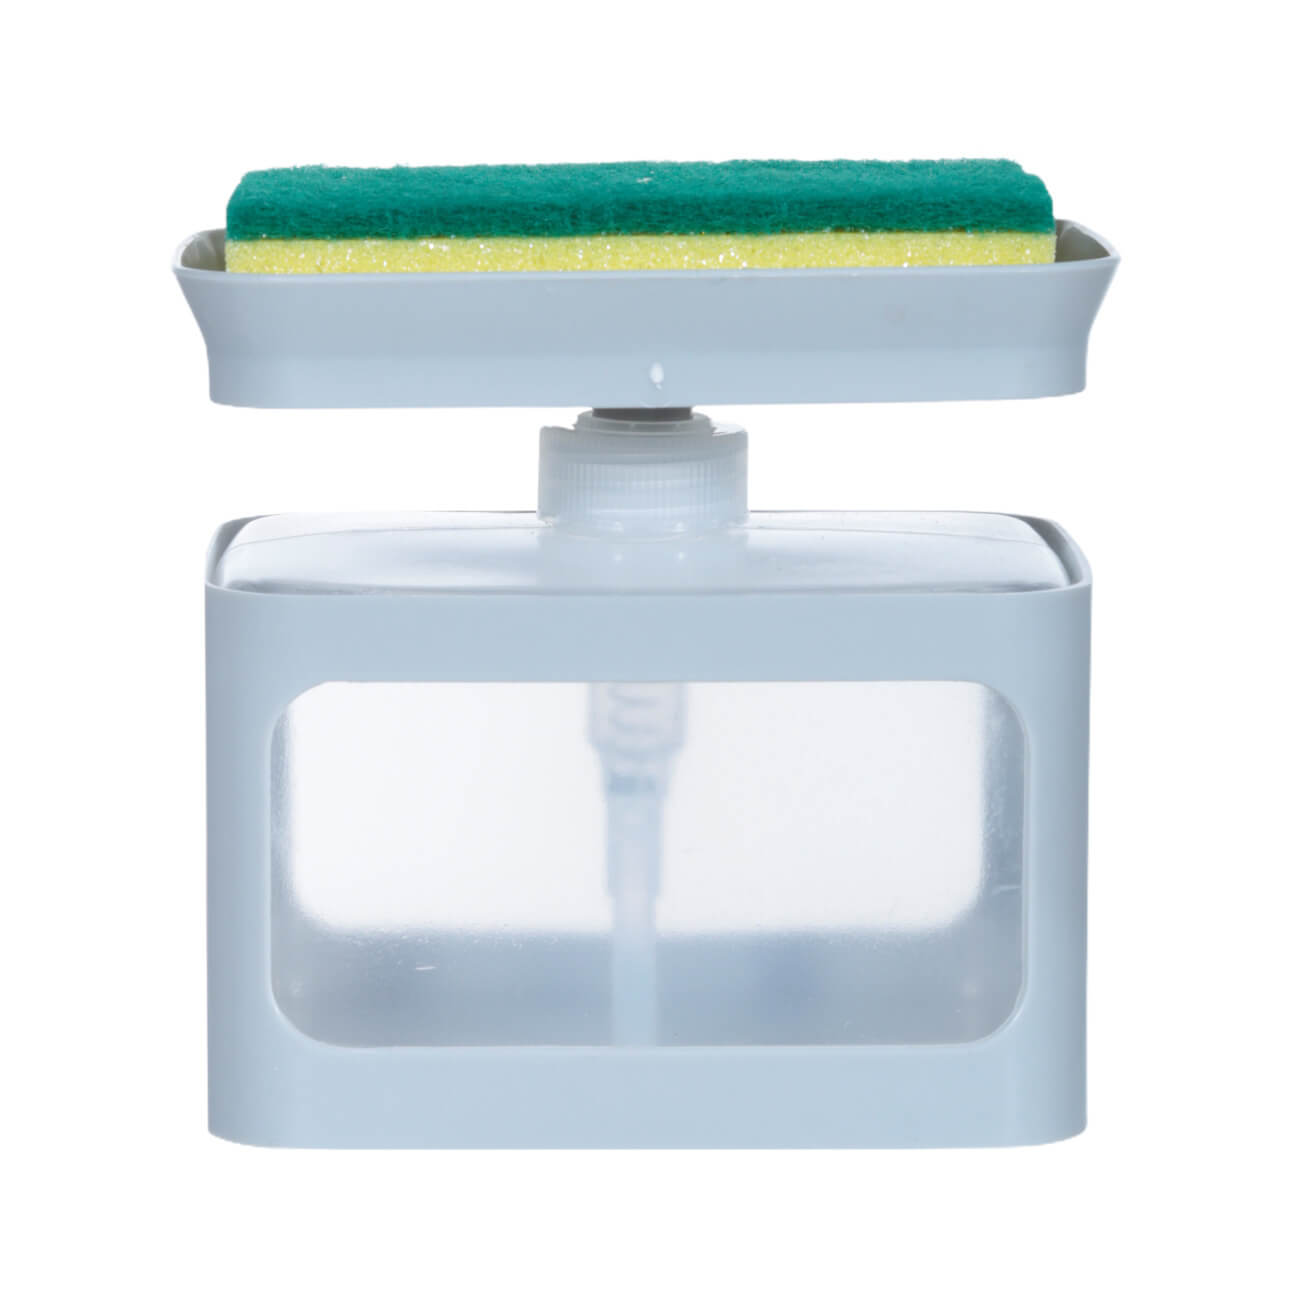 Detergent dispenser, 680 ml, with sponge, Platform, Plastic, Grey, Keeping изображение № 1